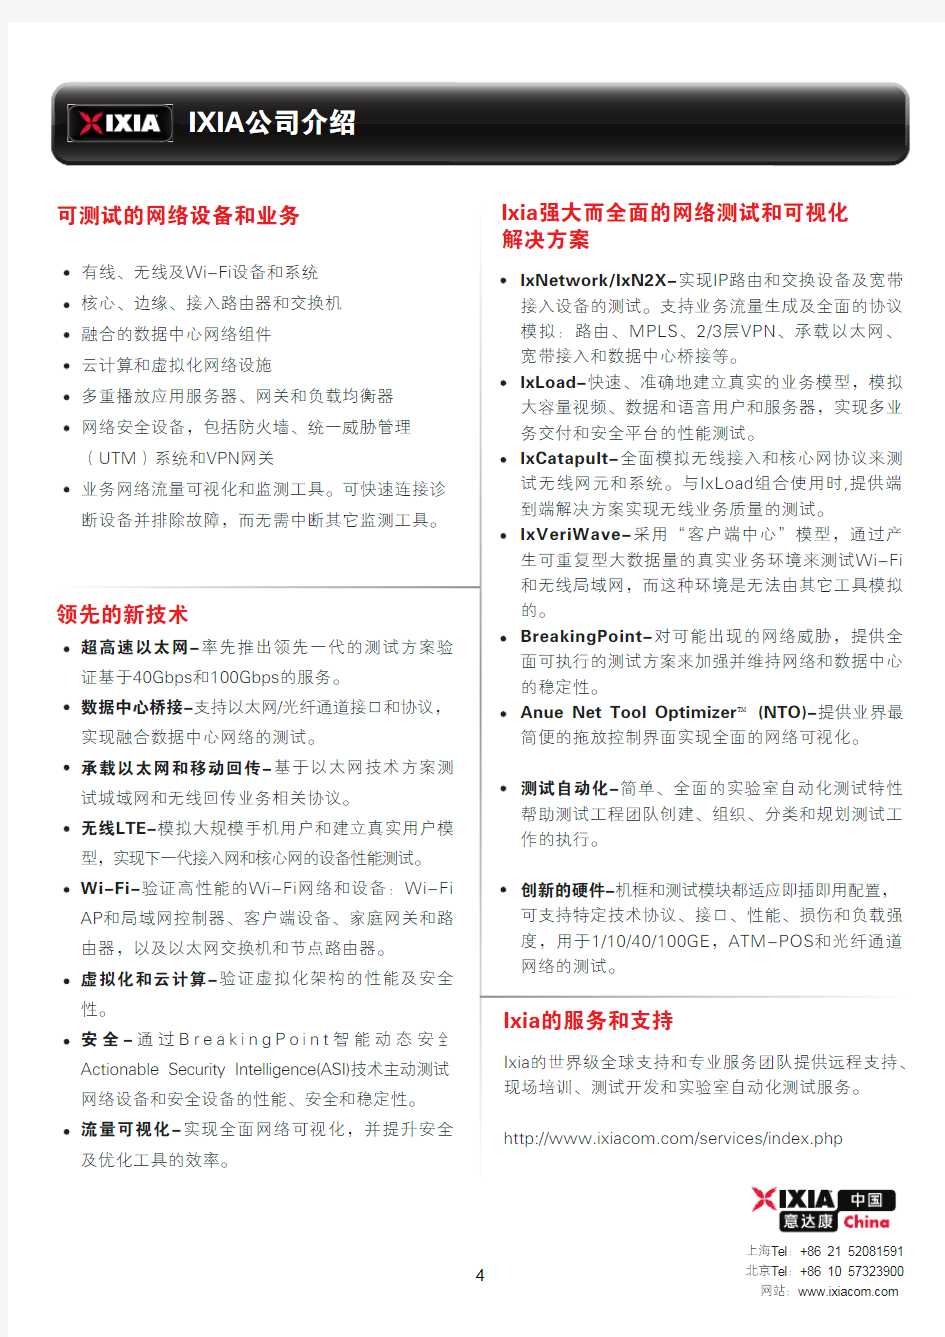 Ixia中文文档Company Introduction